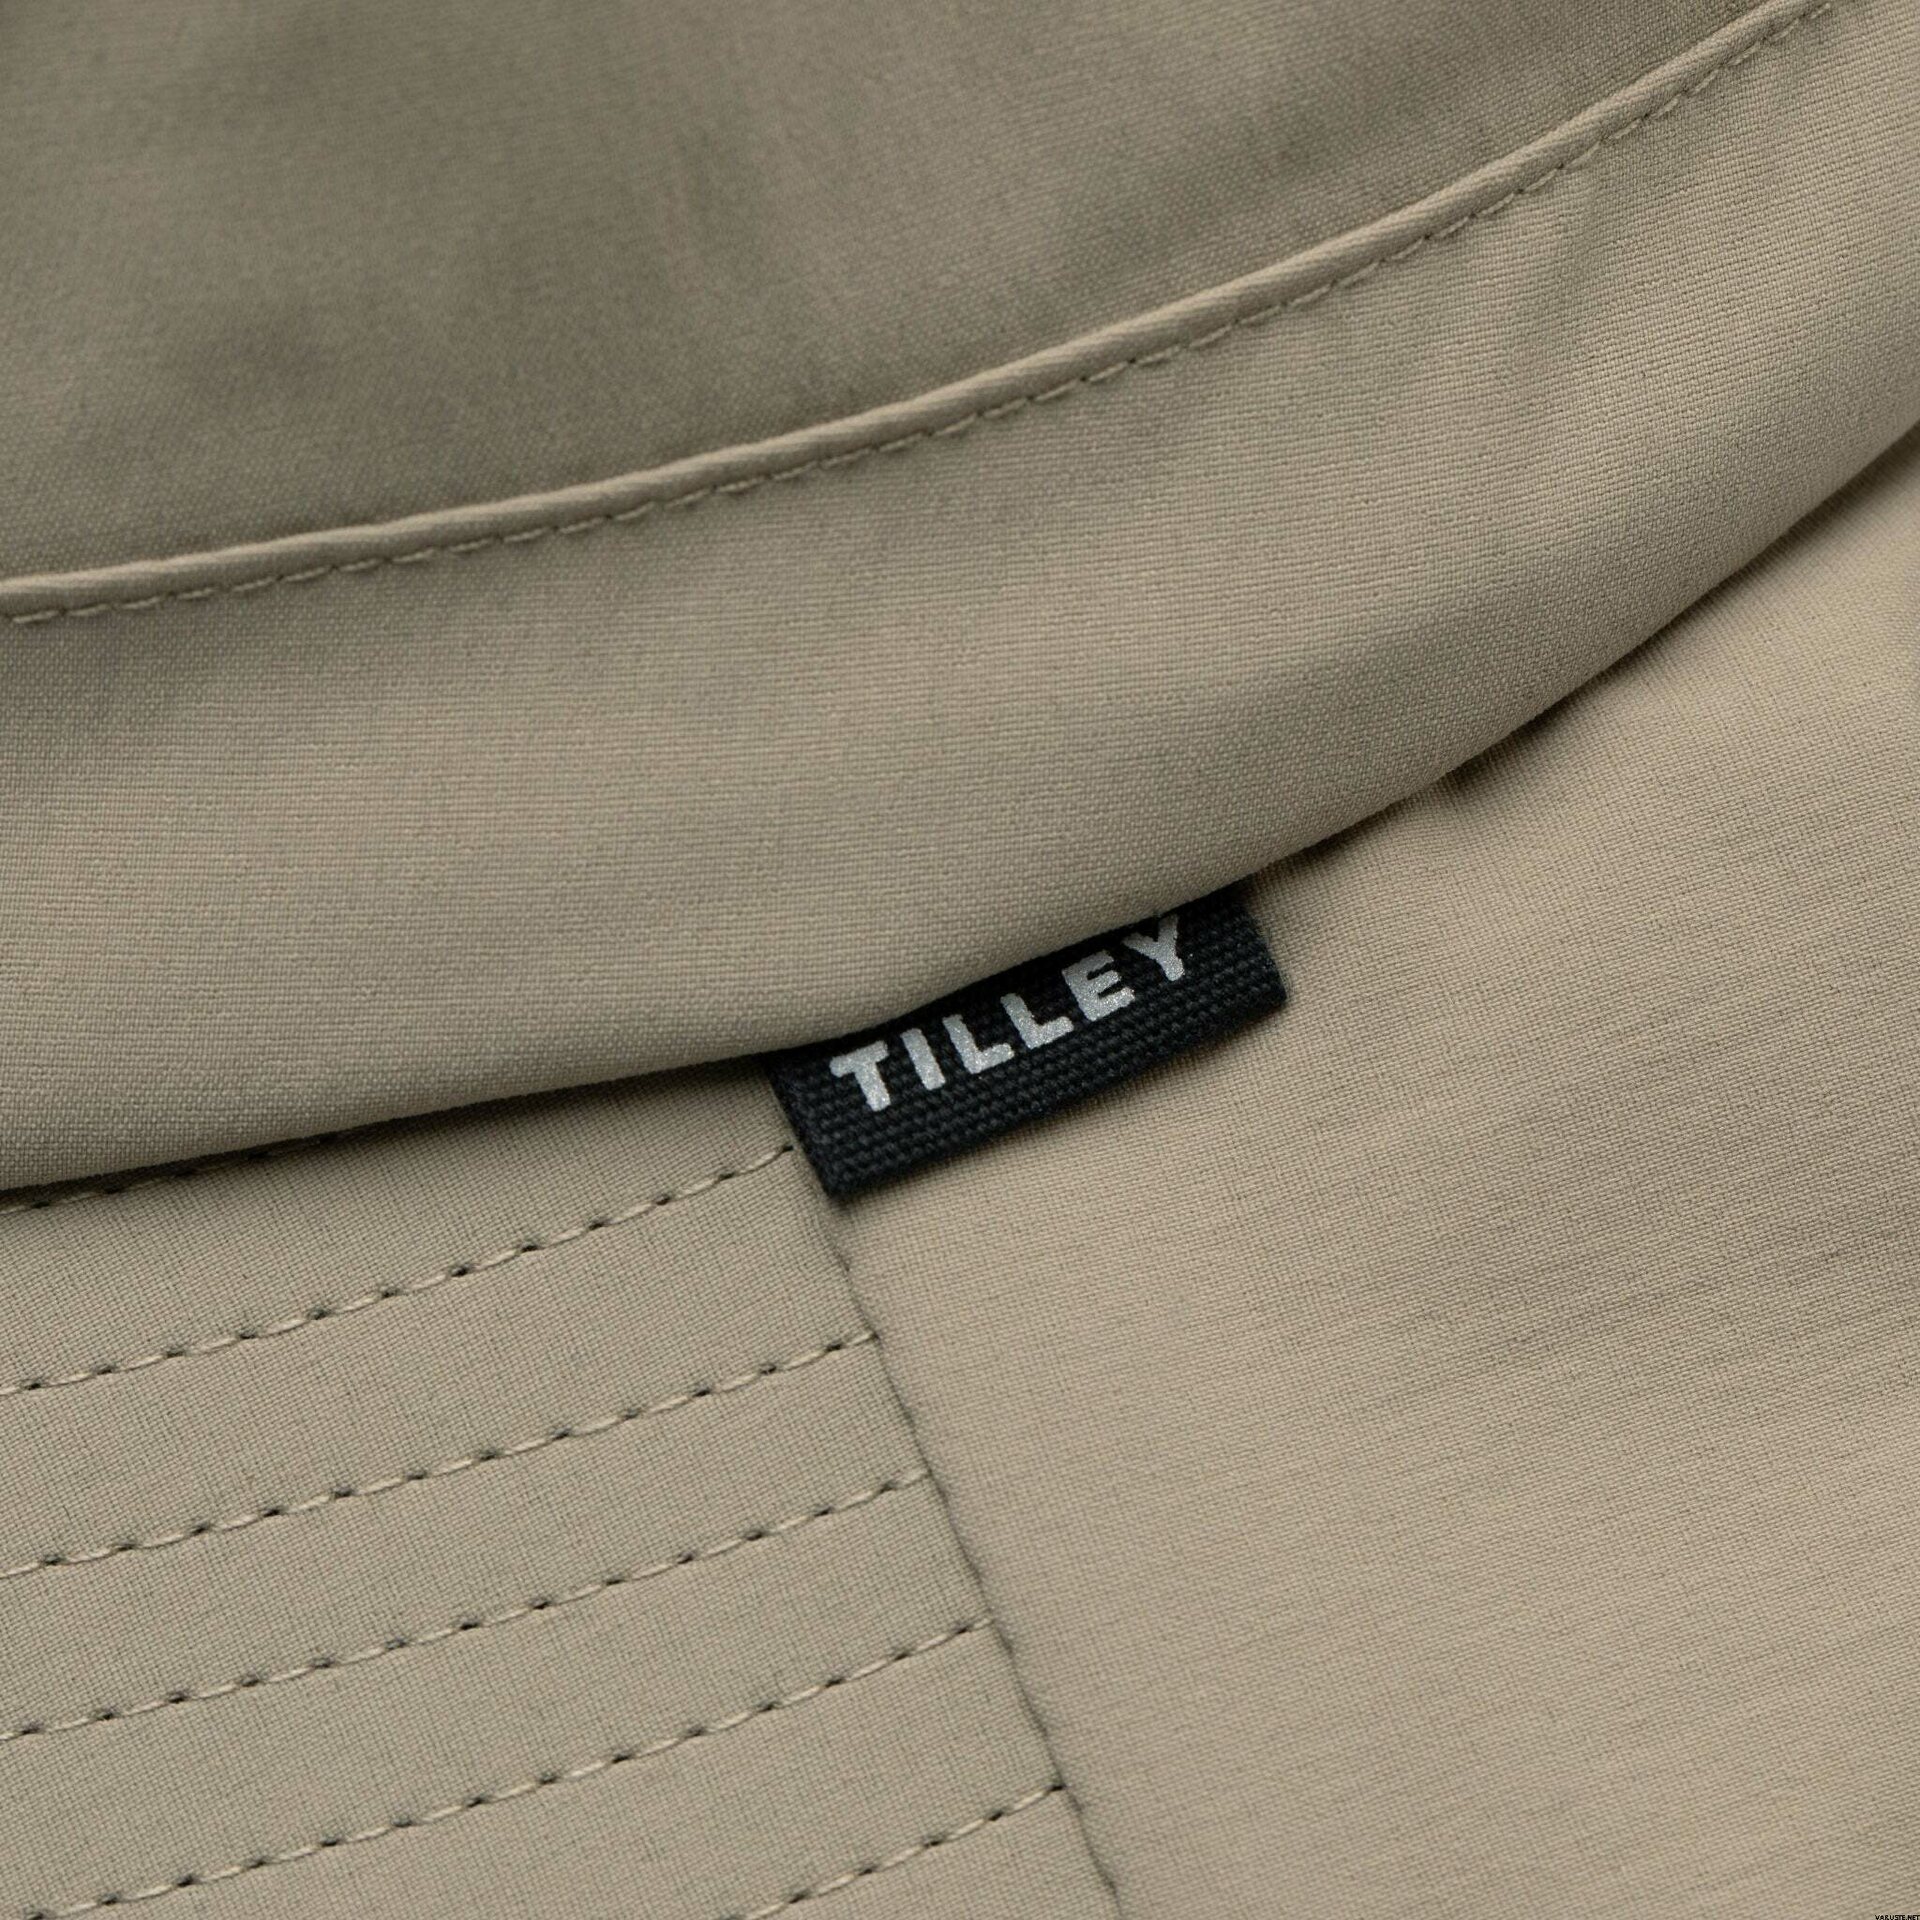 Tilley Ultralight Cape Sun Hat | UV-hats | Varuste.net English